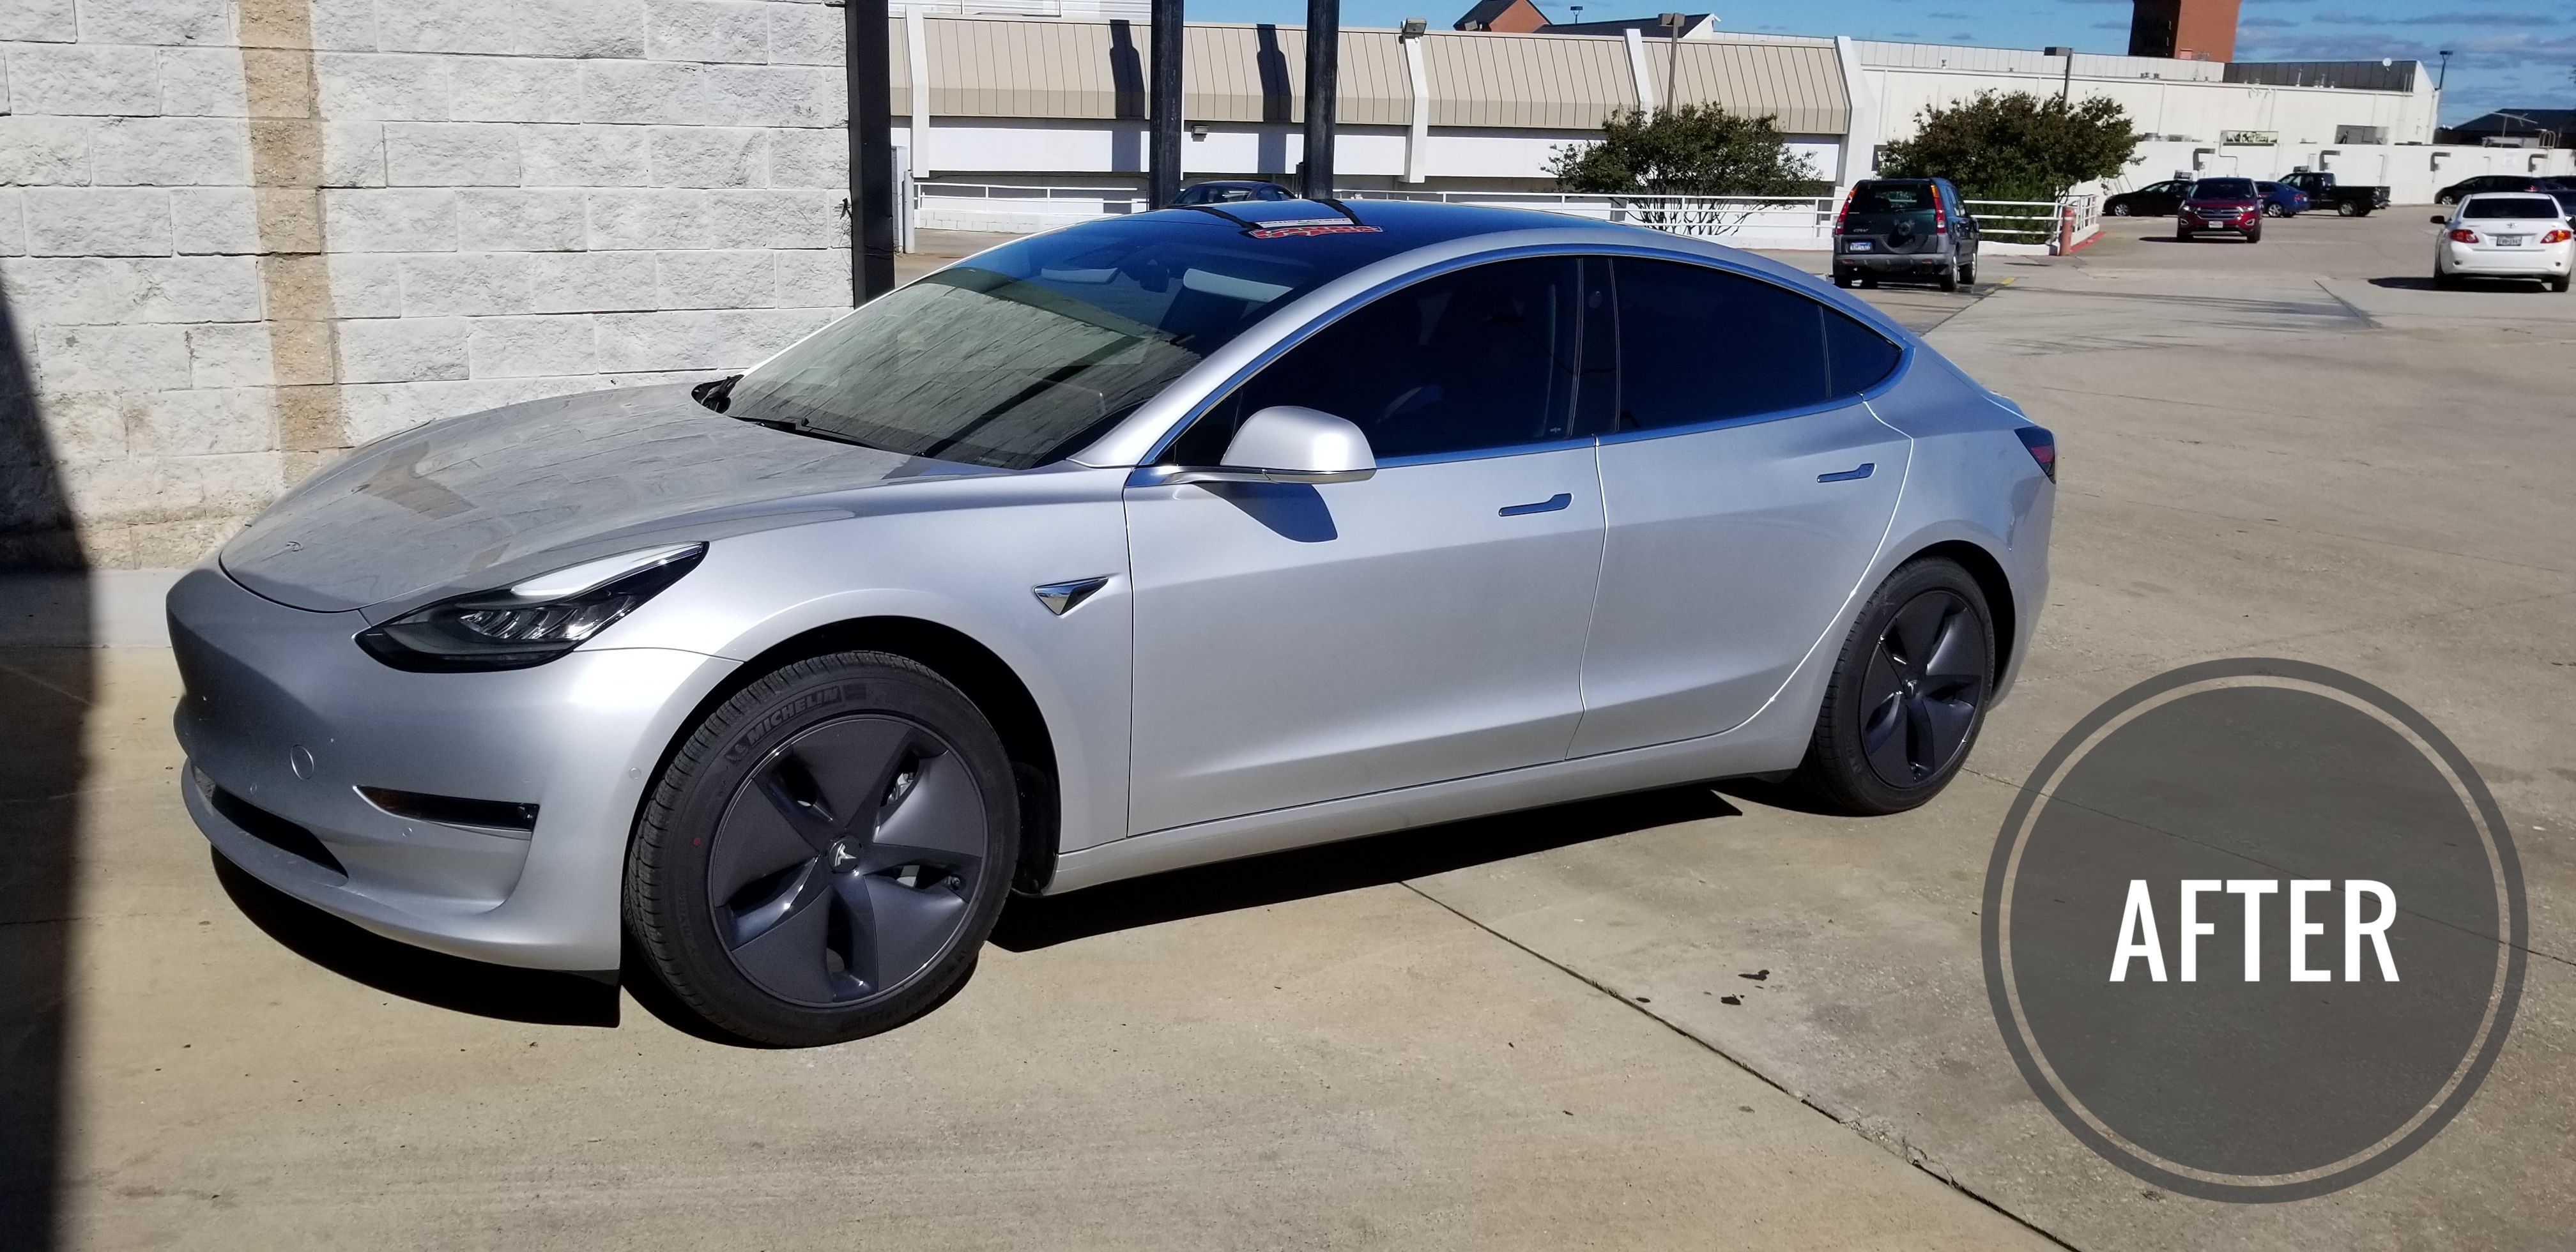 Auto Window Tinting in Denton, TX | FlexShield Window Tint & Car Audio | Tesla Model 3 Wincos After